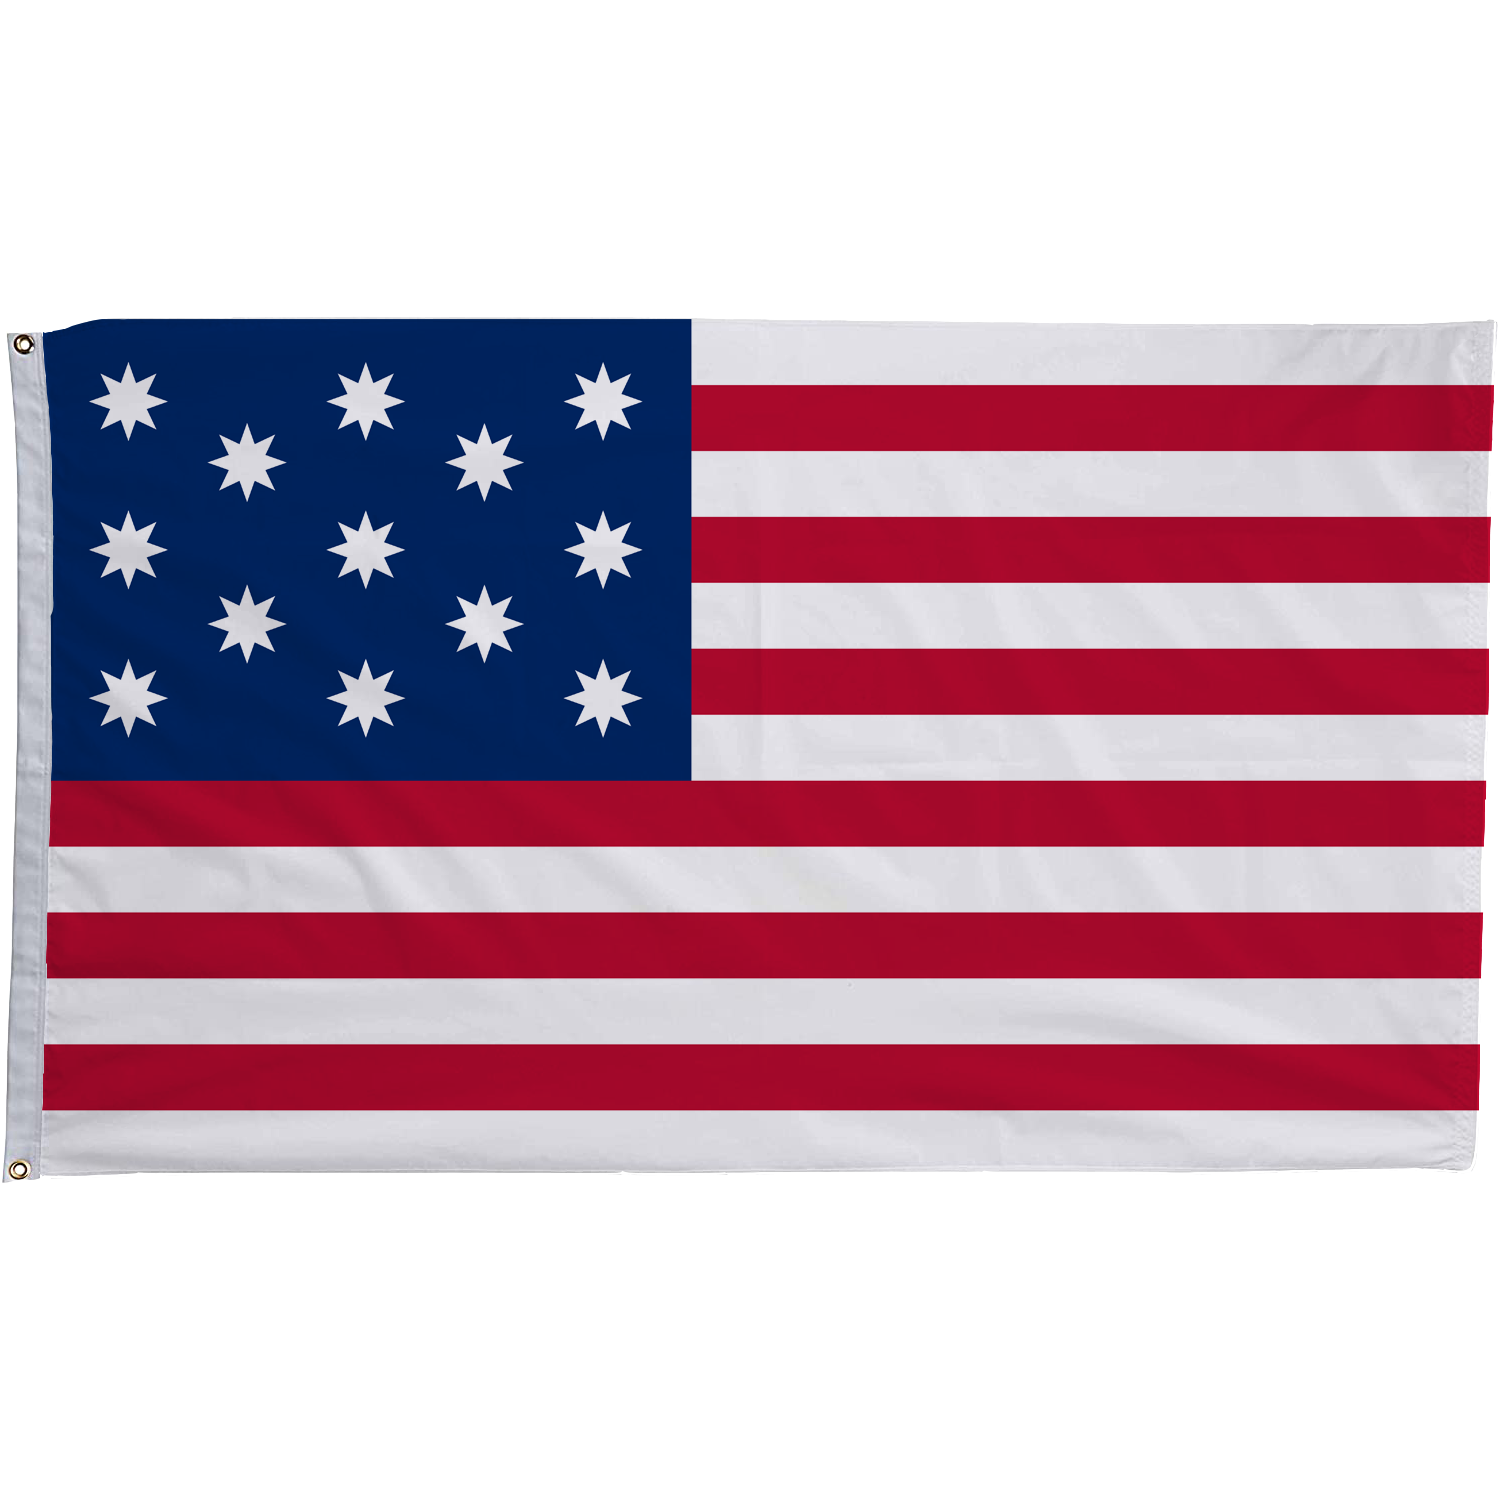 american flag 1778